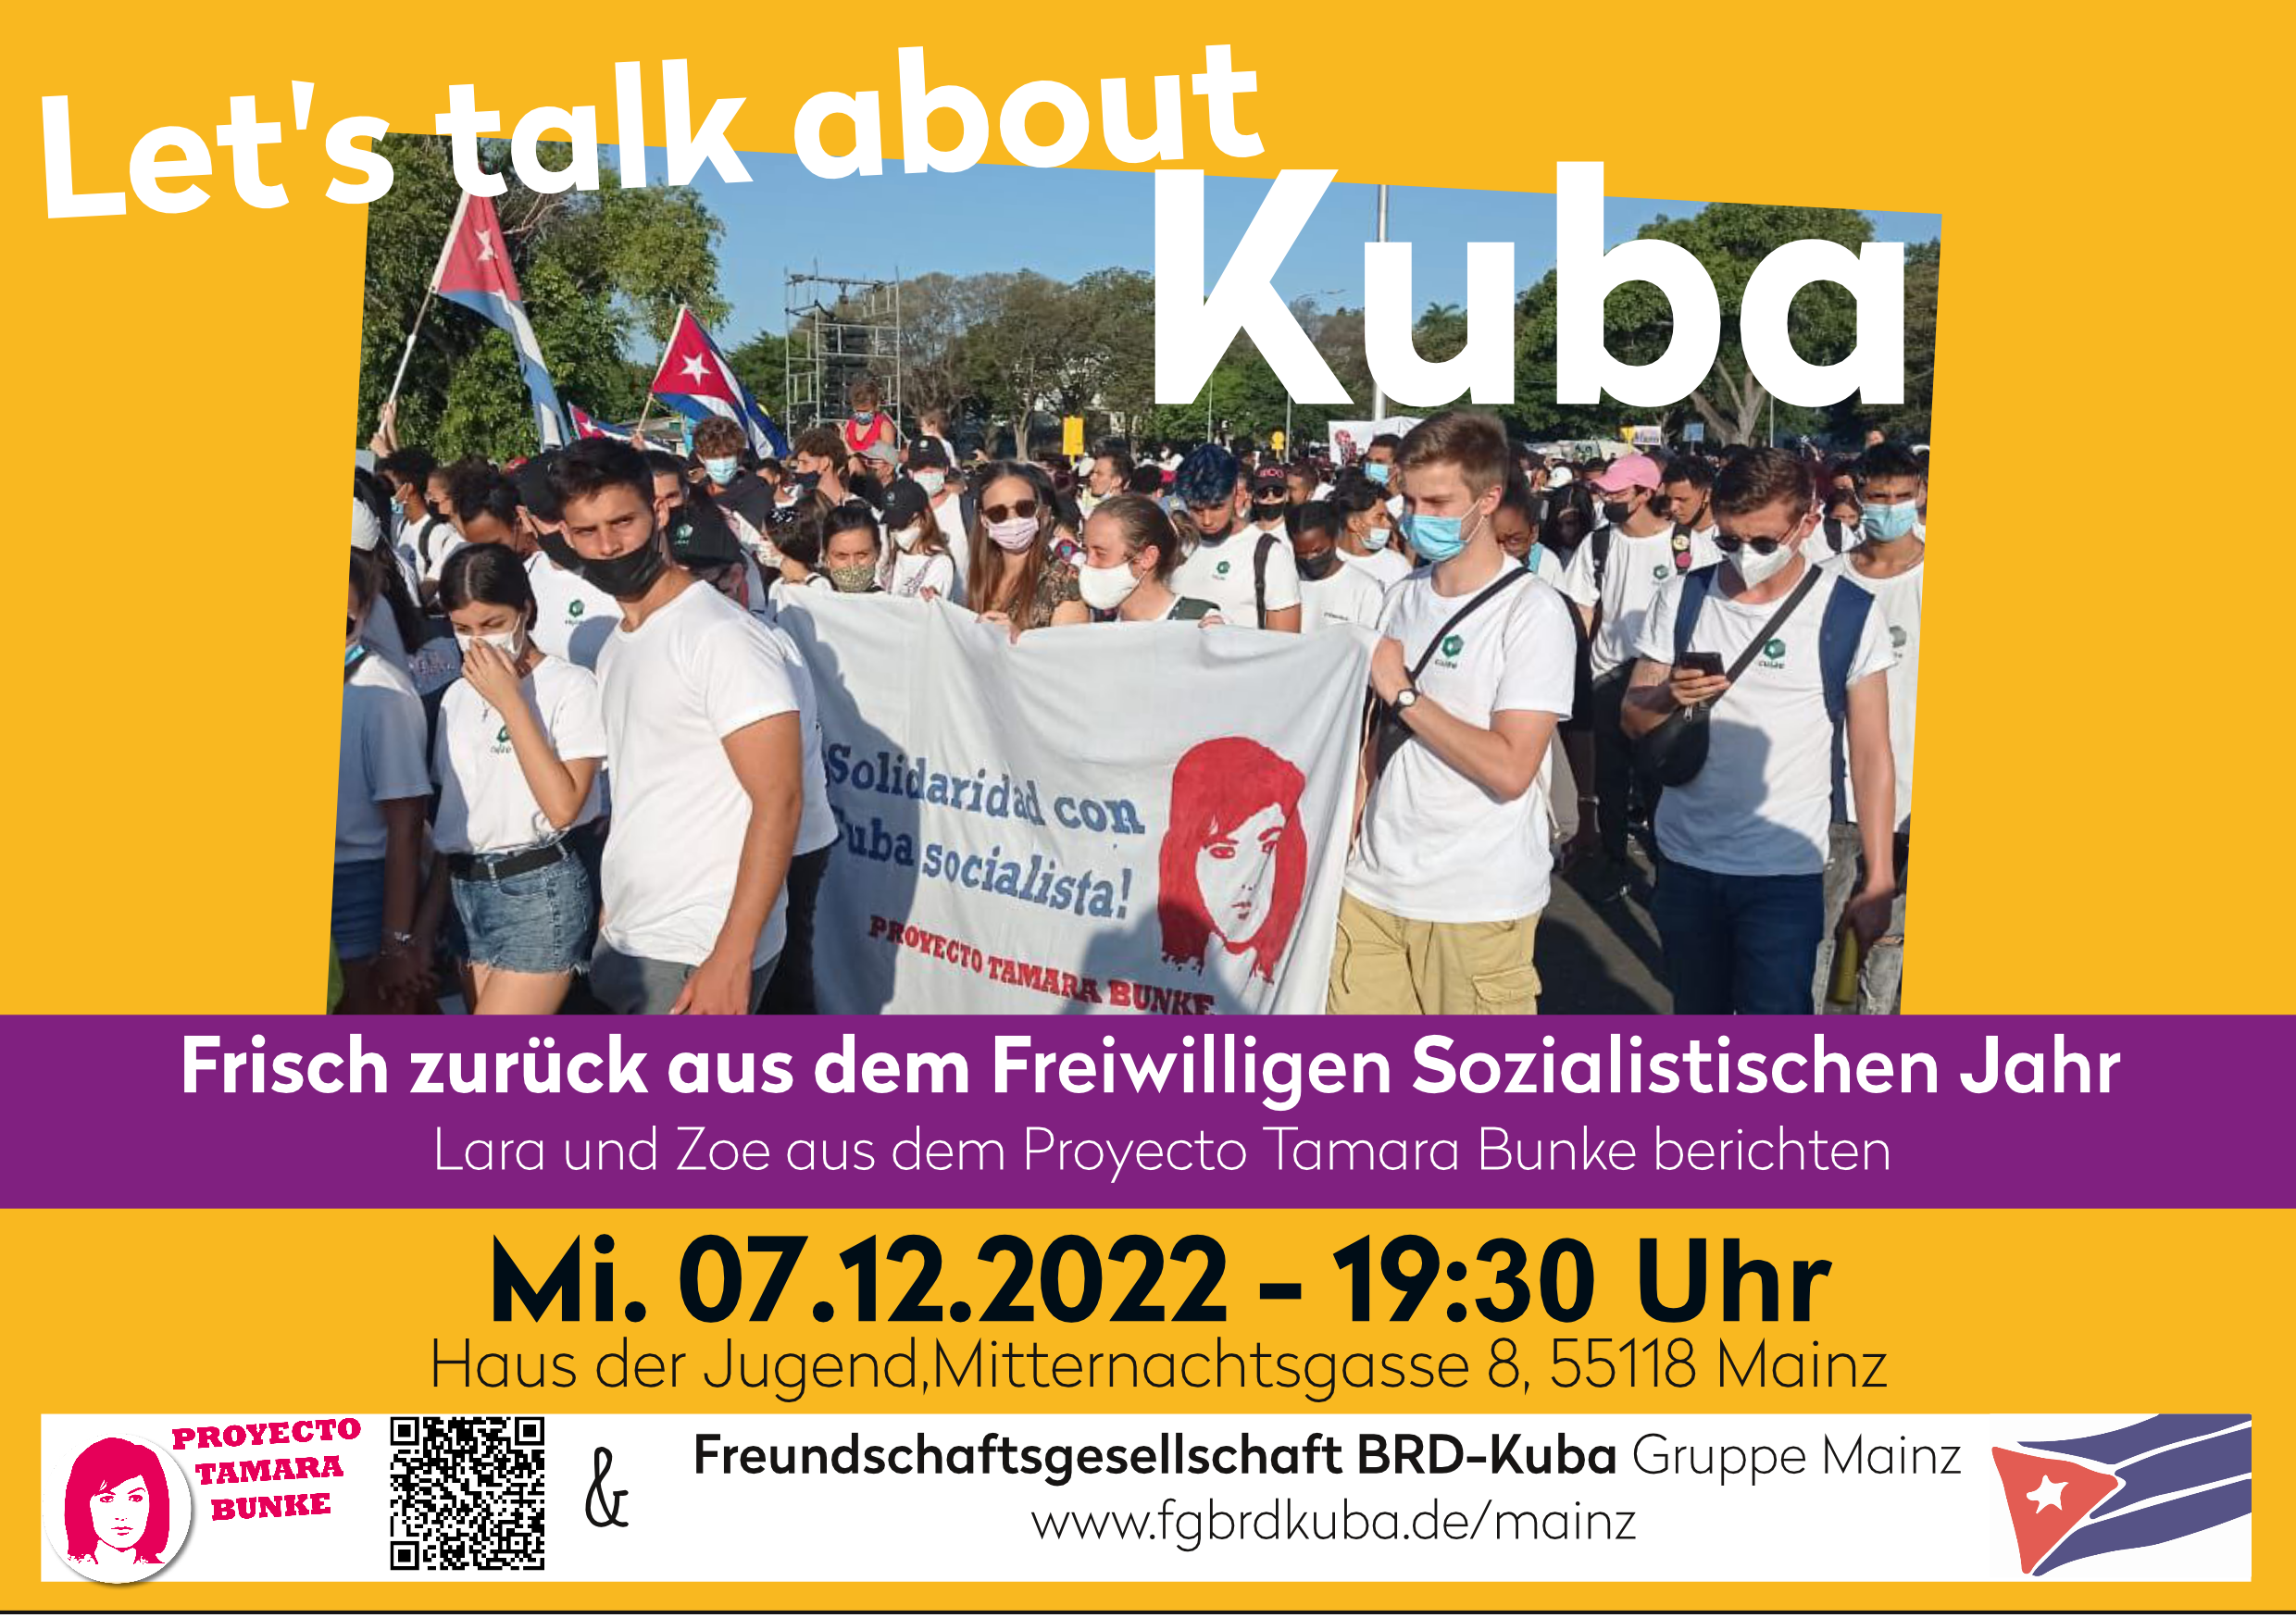 Mainz: Let‘s talk about Kuba